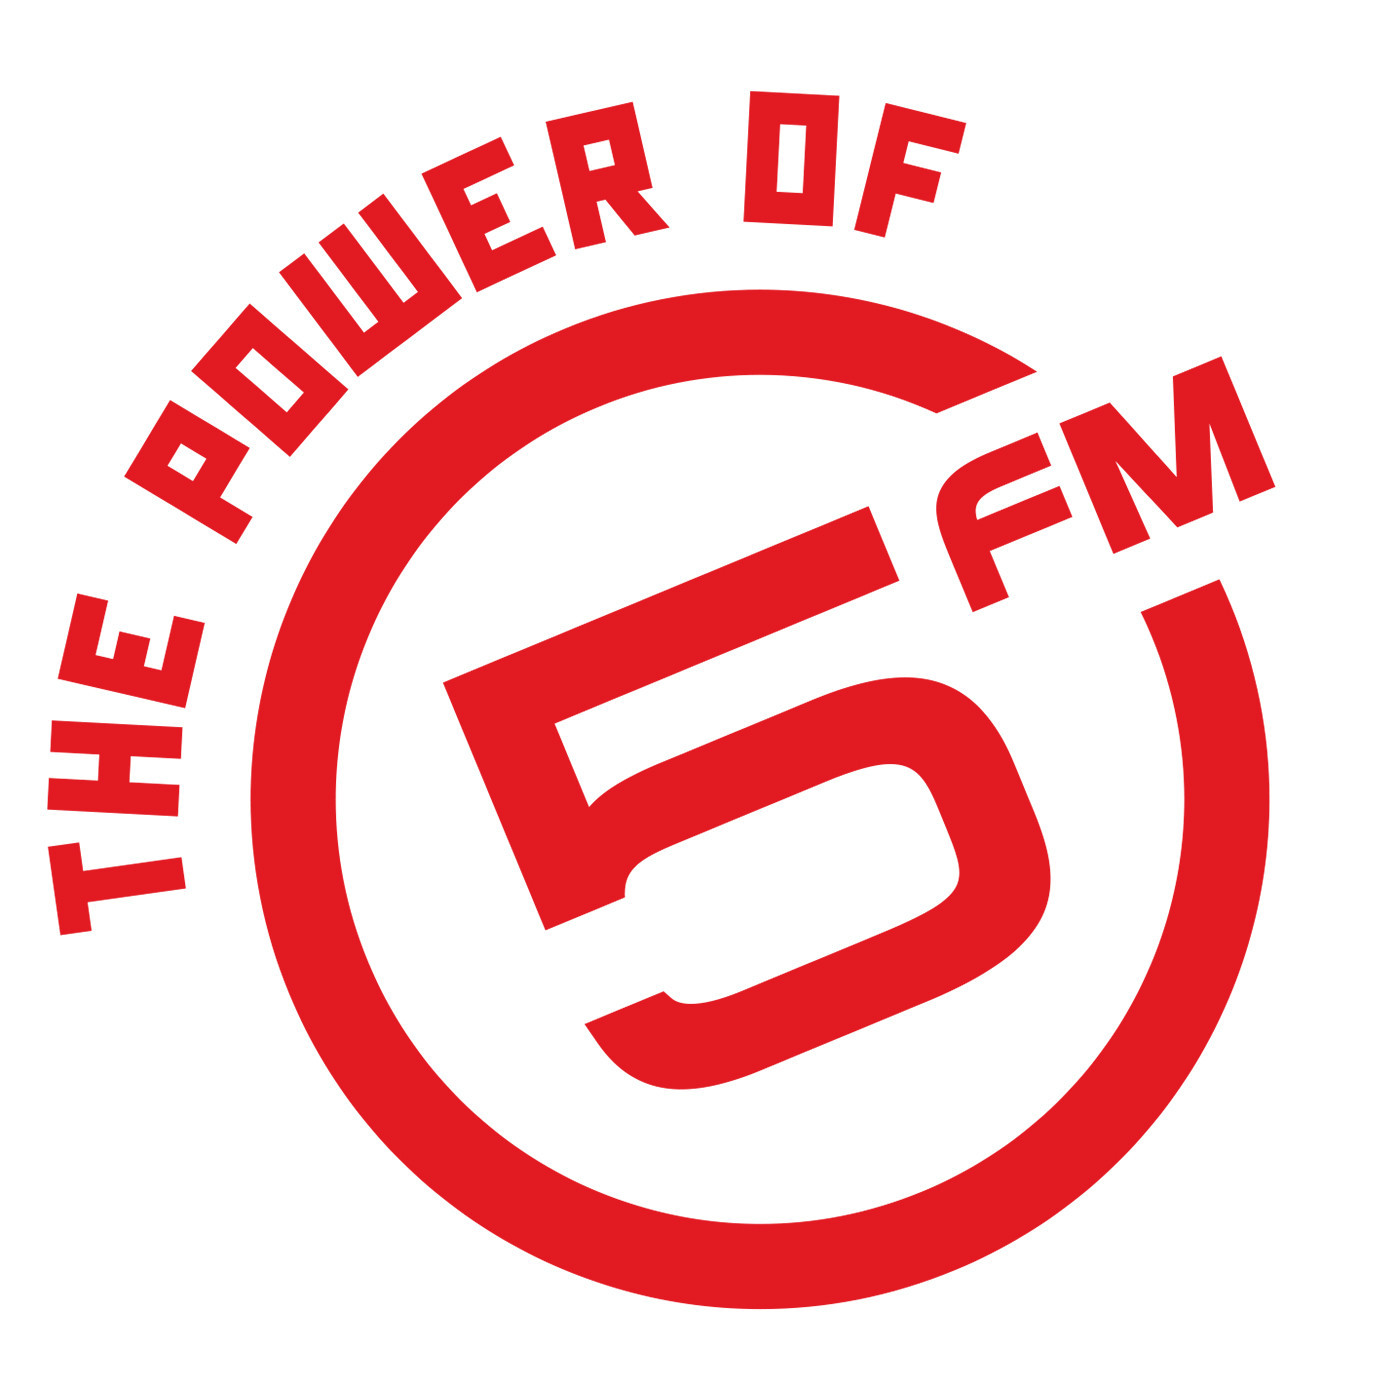 5FM LEGENDS INTERVIEW - RYAN MURGATROYD (CRAZY WHITE BOY) 5 MARCH